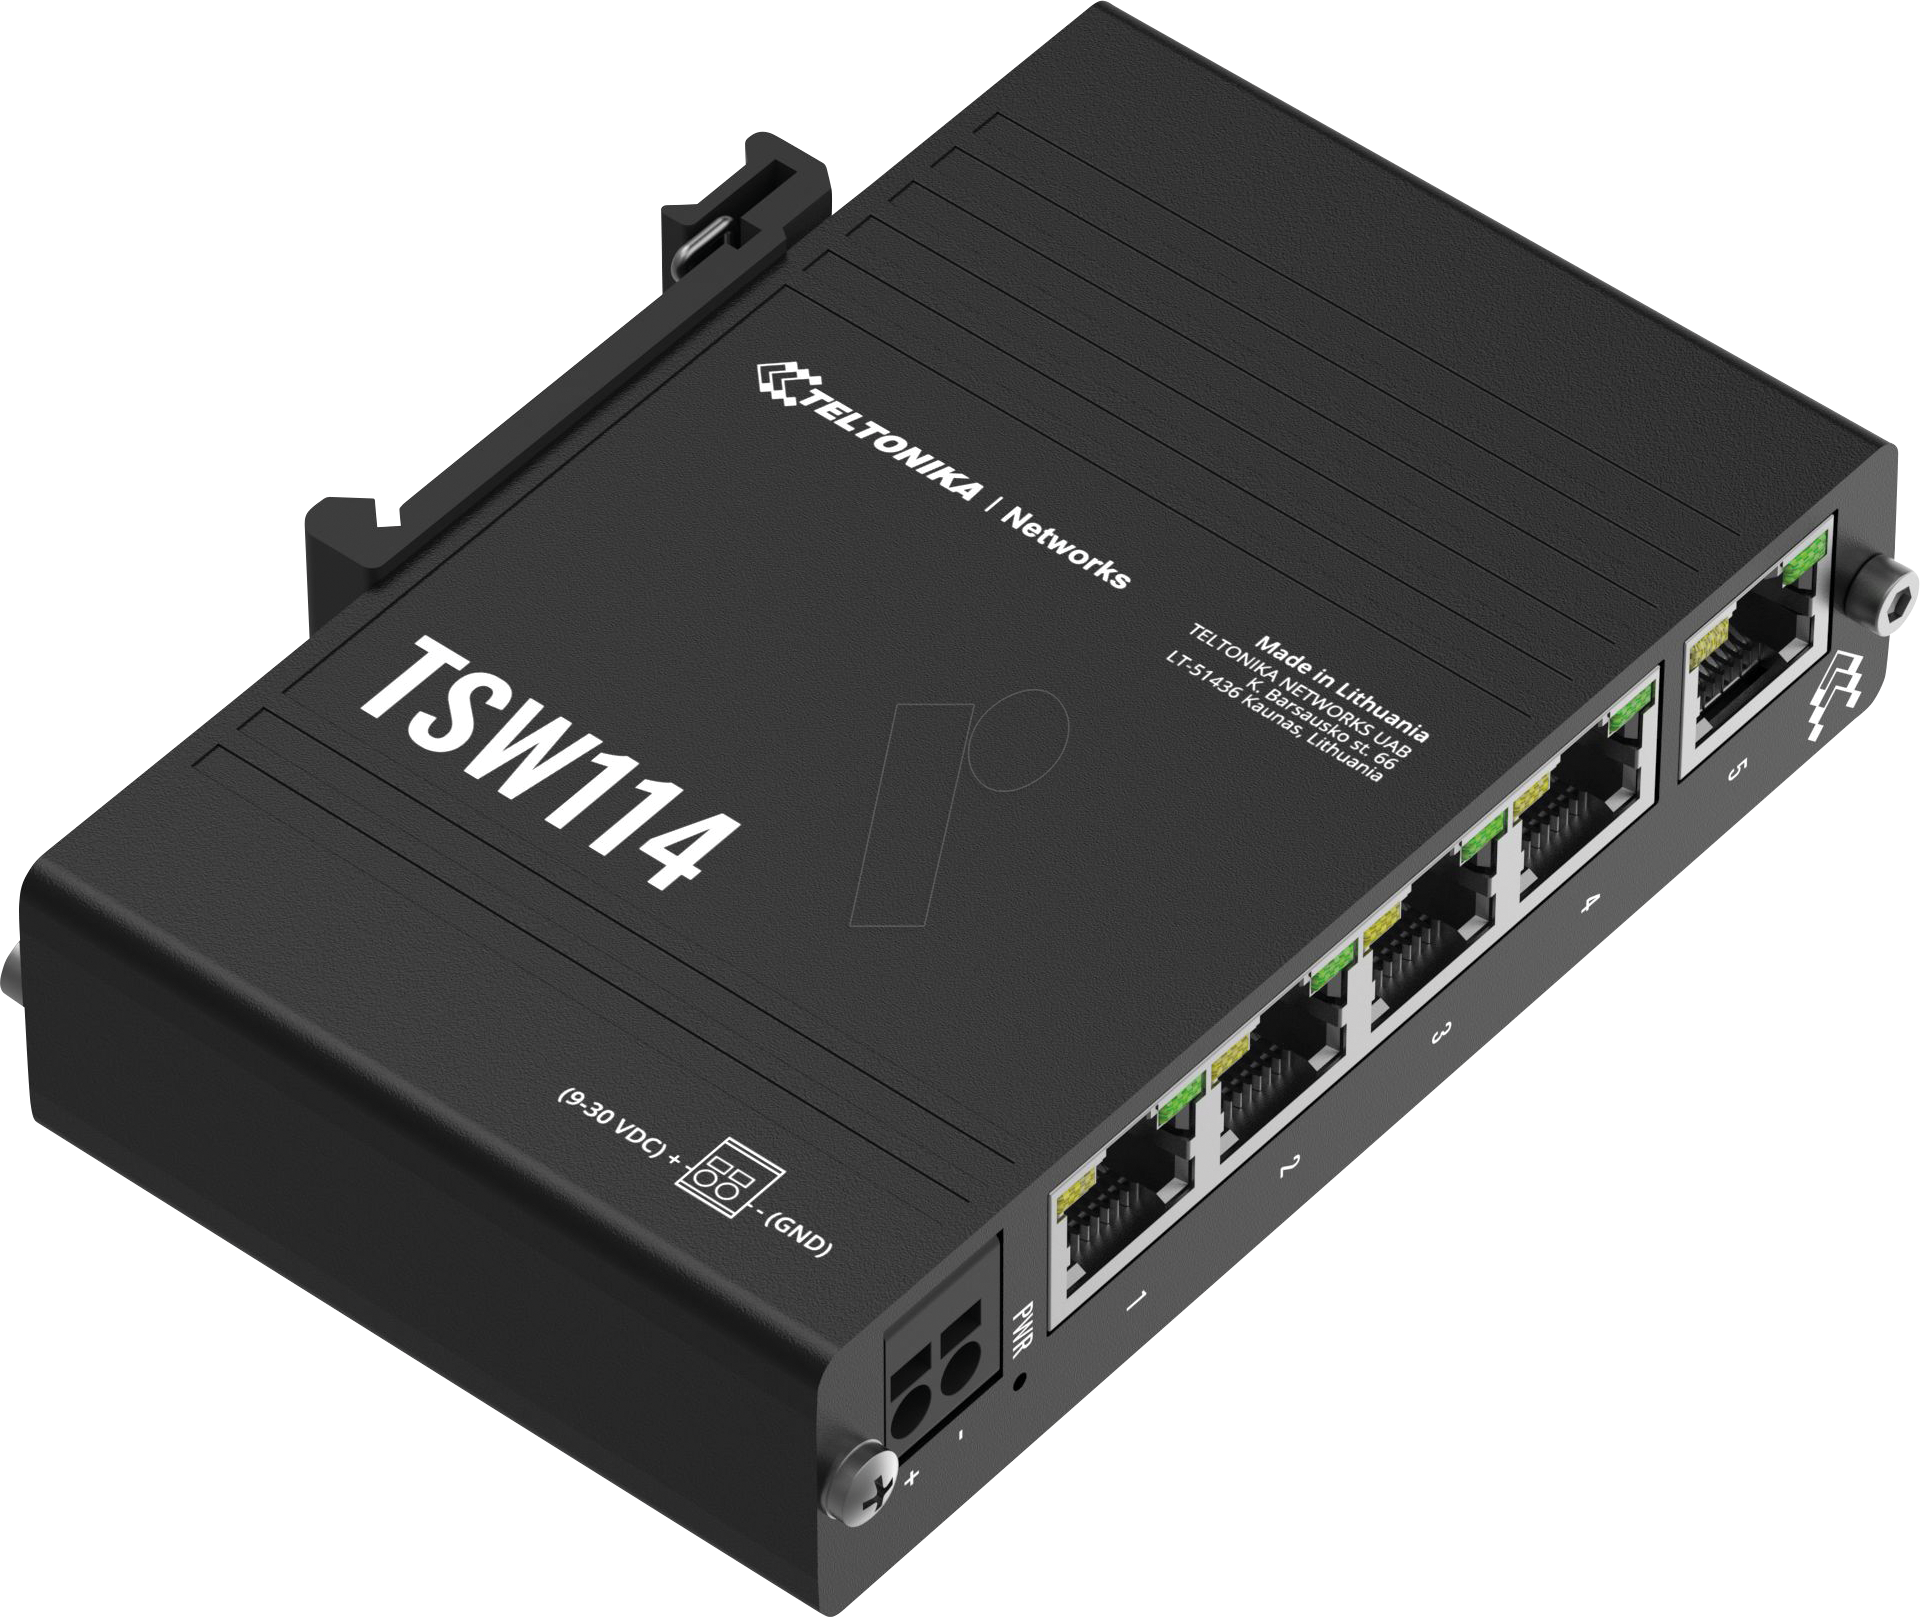 INT 561044: 24-Port Gigabit Ethernet Switch at reichelt elektronik